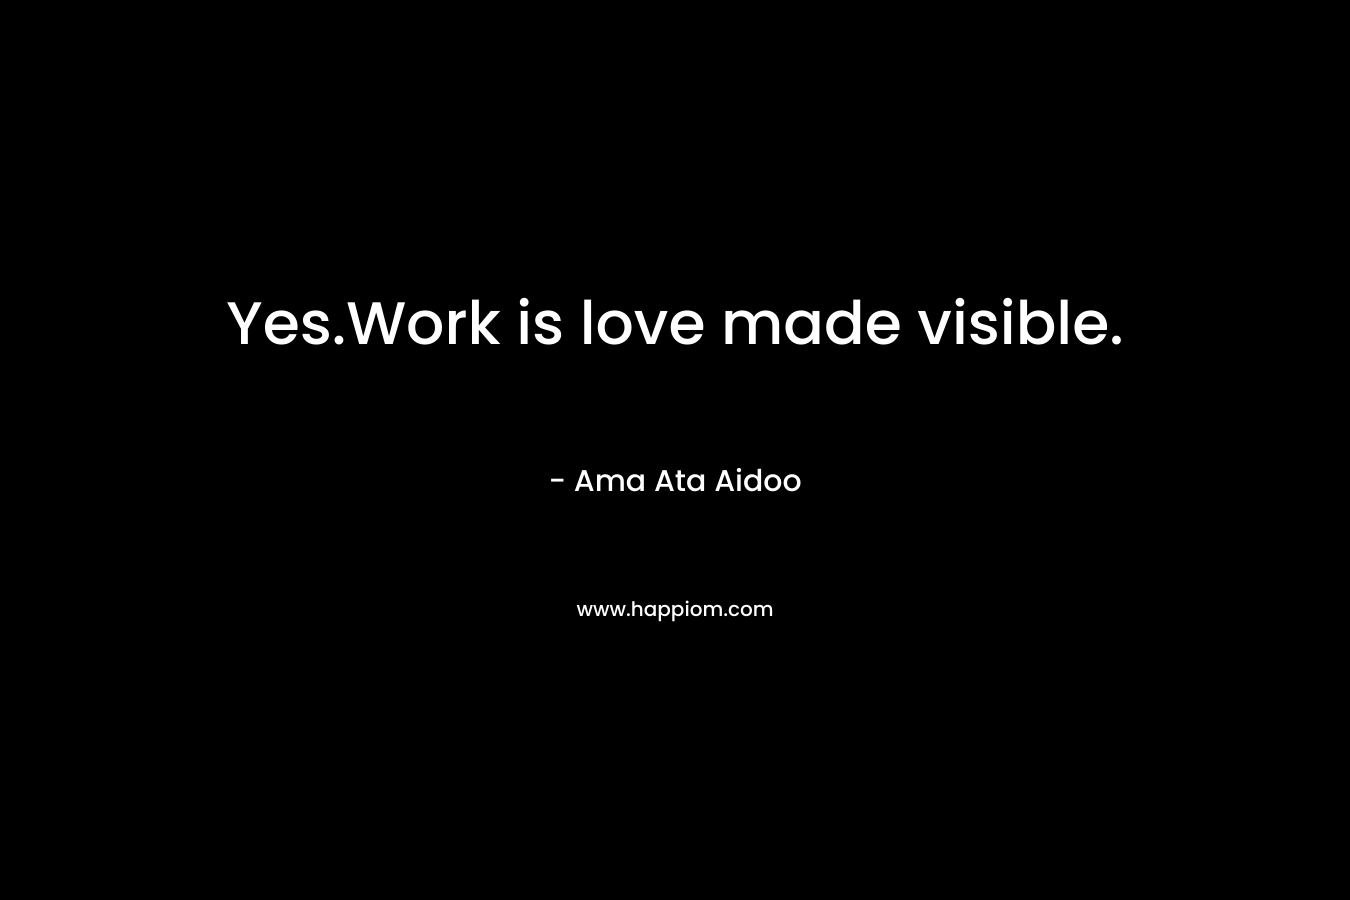 Yes.Work is love made visible. – Ama Ata Aidoo